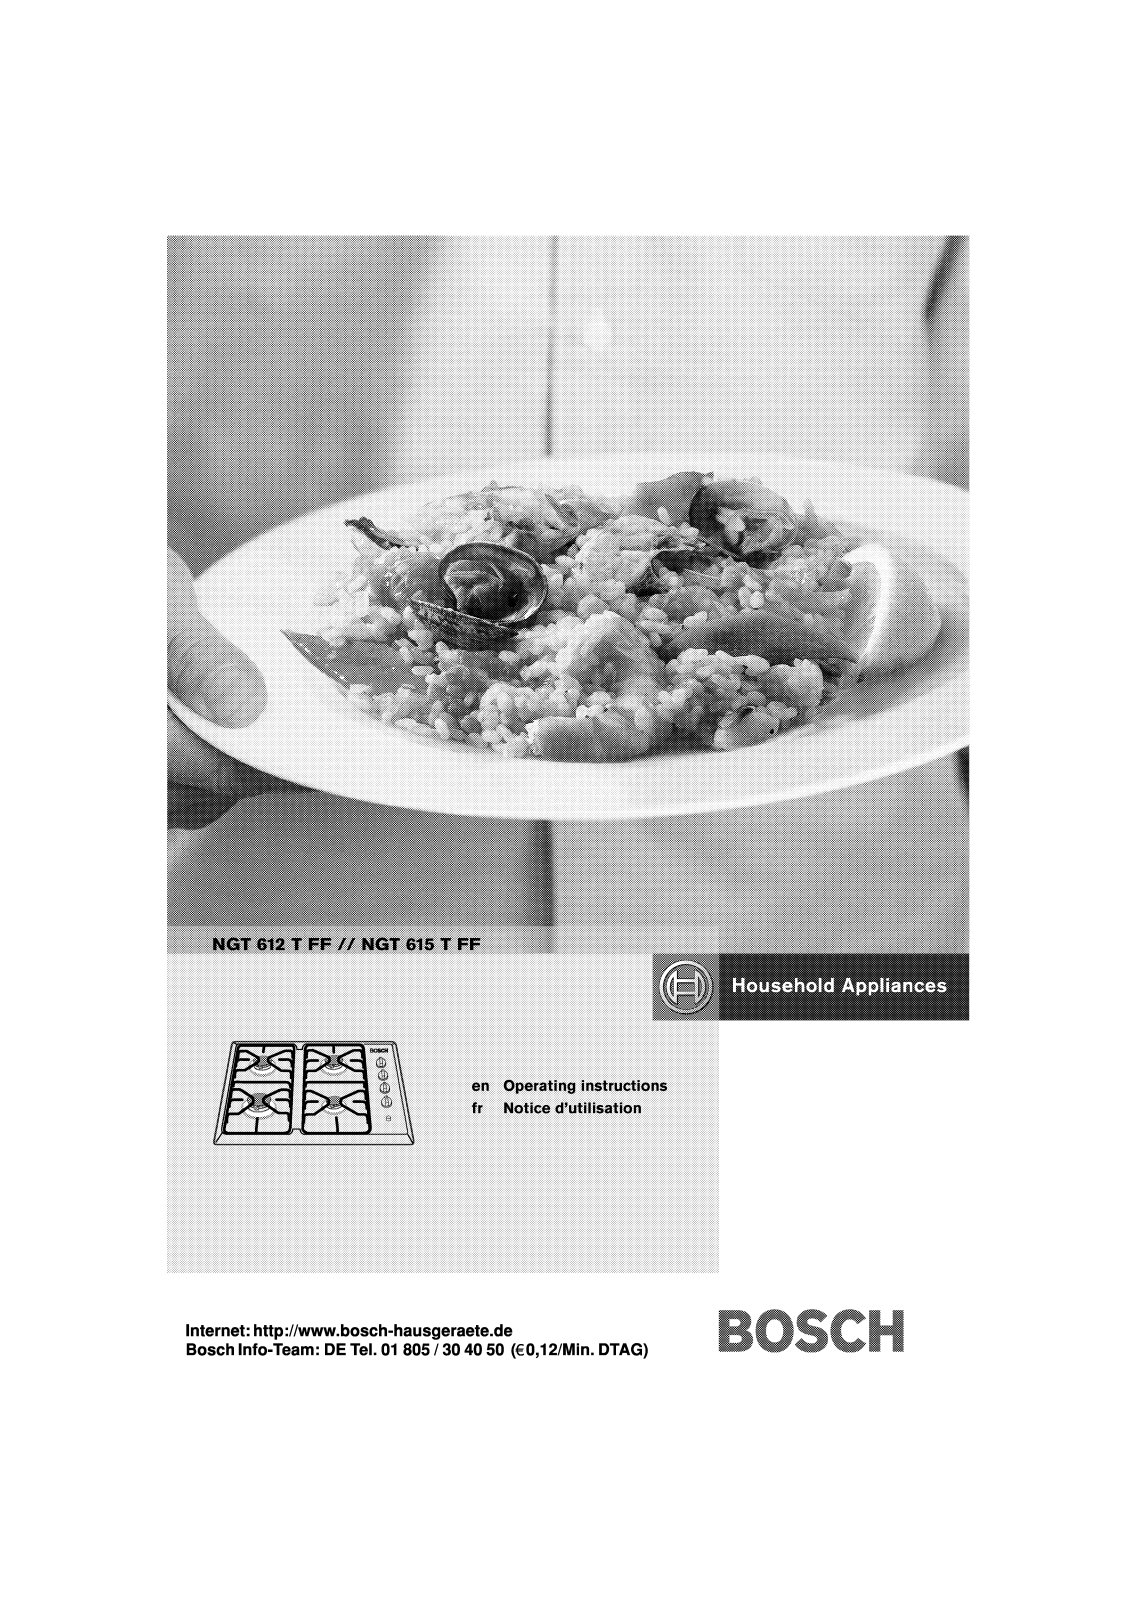 BOSCH NCT645 User Manual